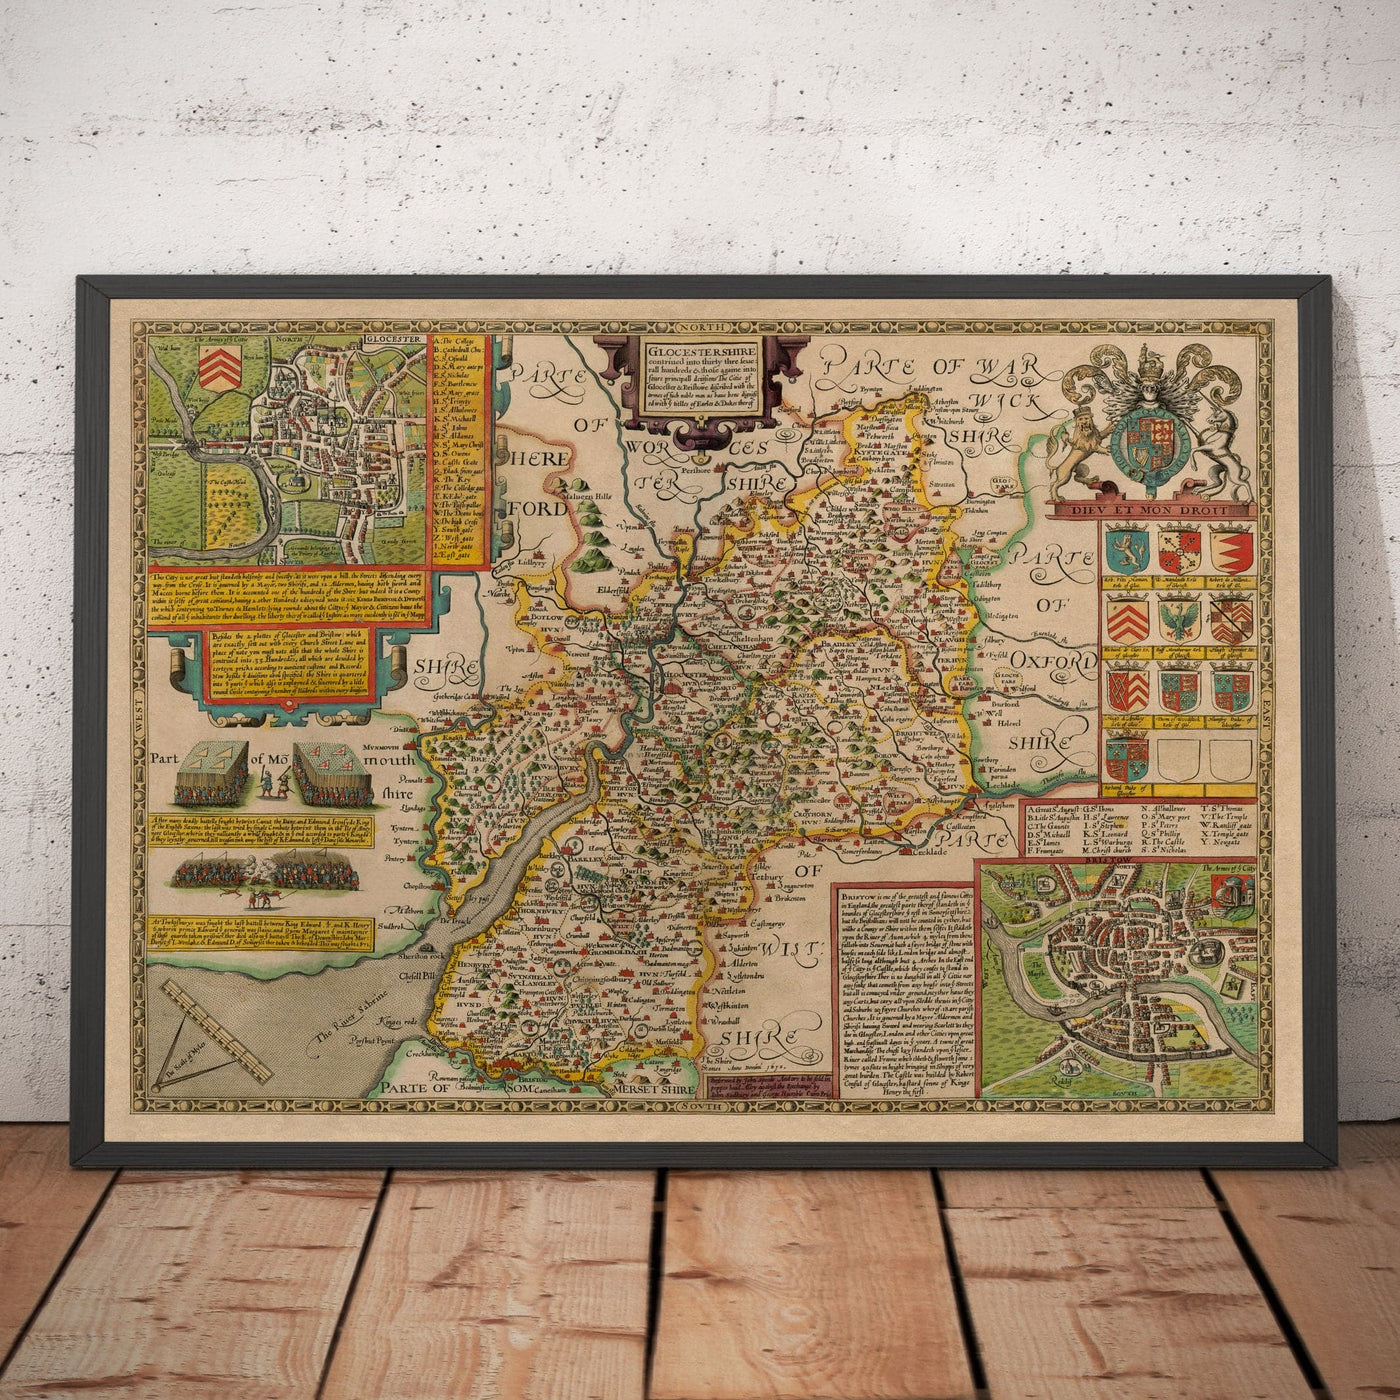 Alte Karte von Gloucestershire, 1611, John Speed ​​- Bristol, Cheltenham, Gloucester, Kingswood, Filton